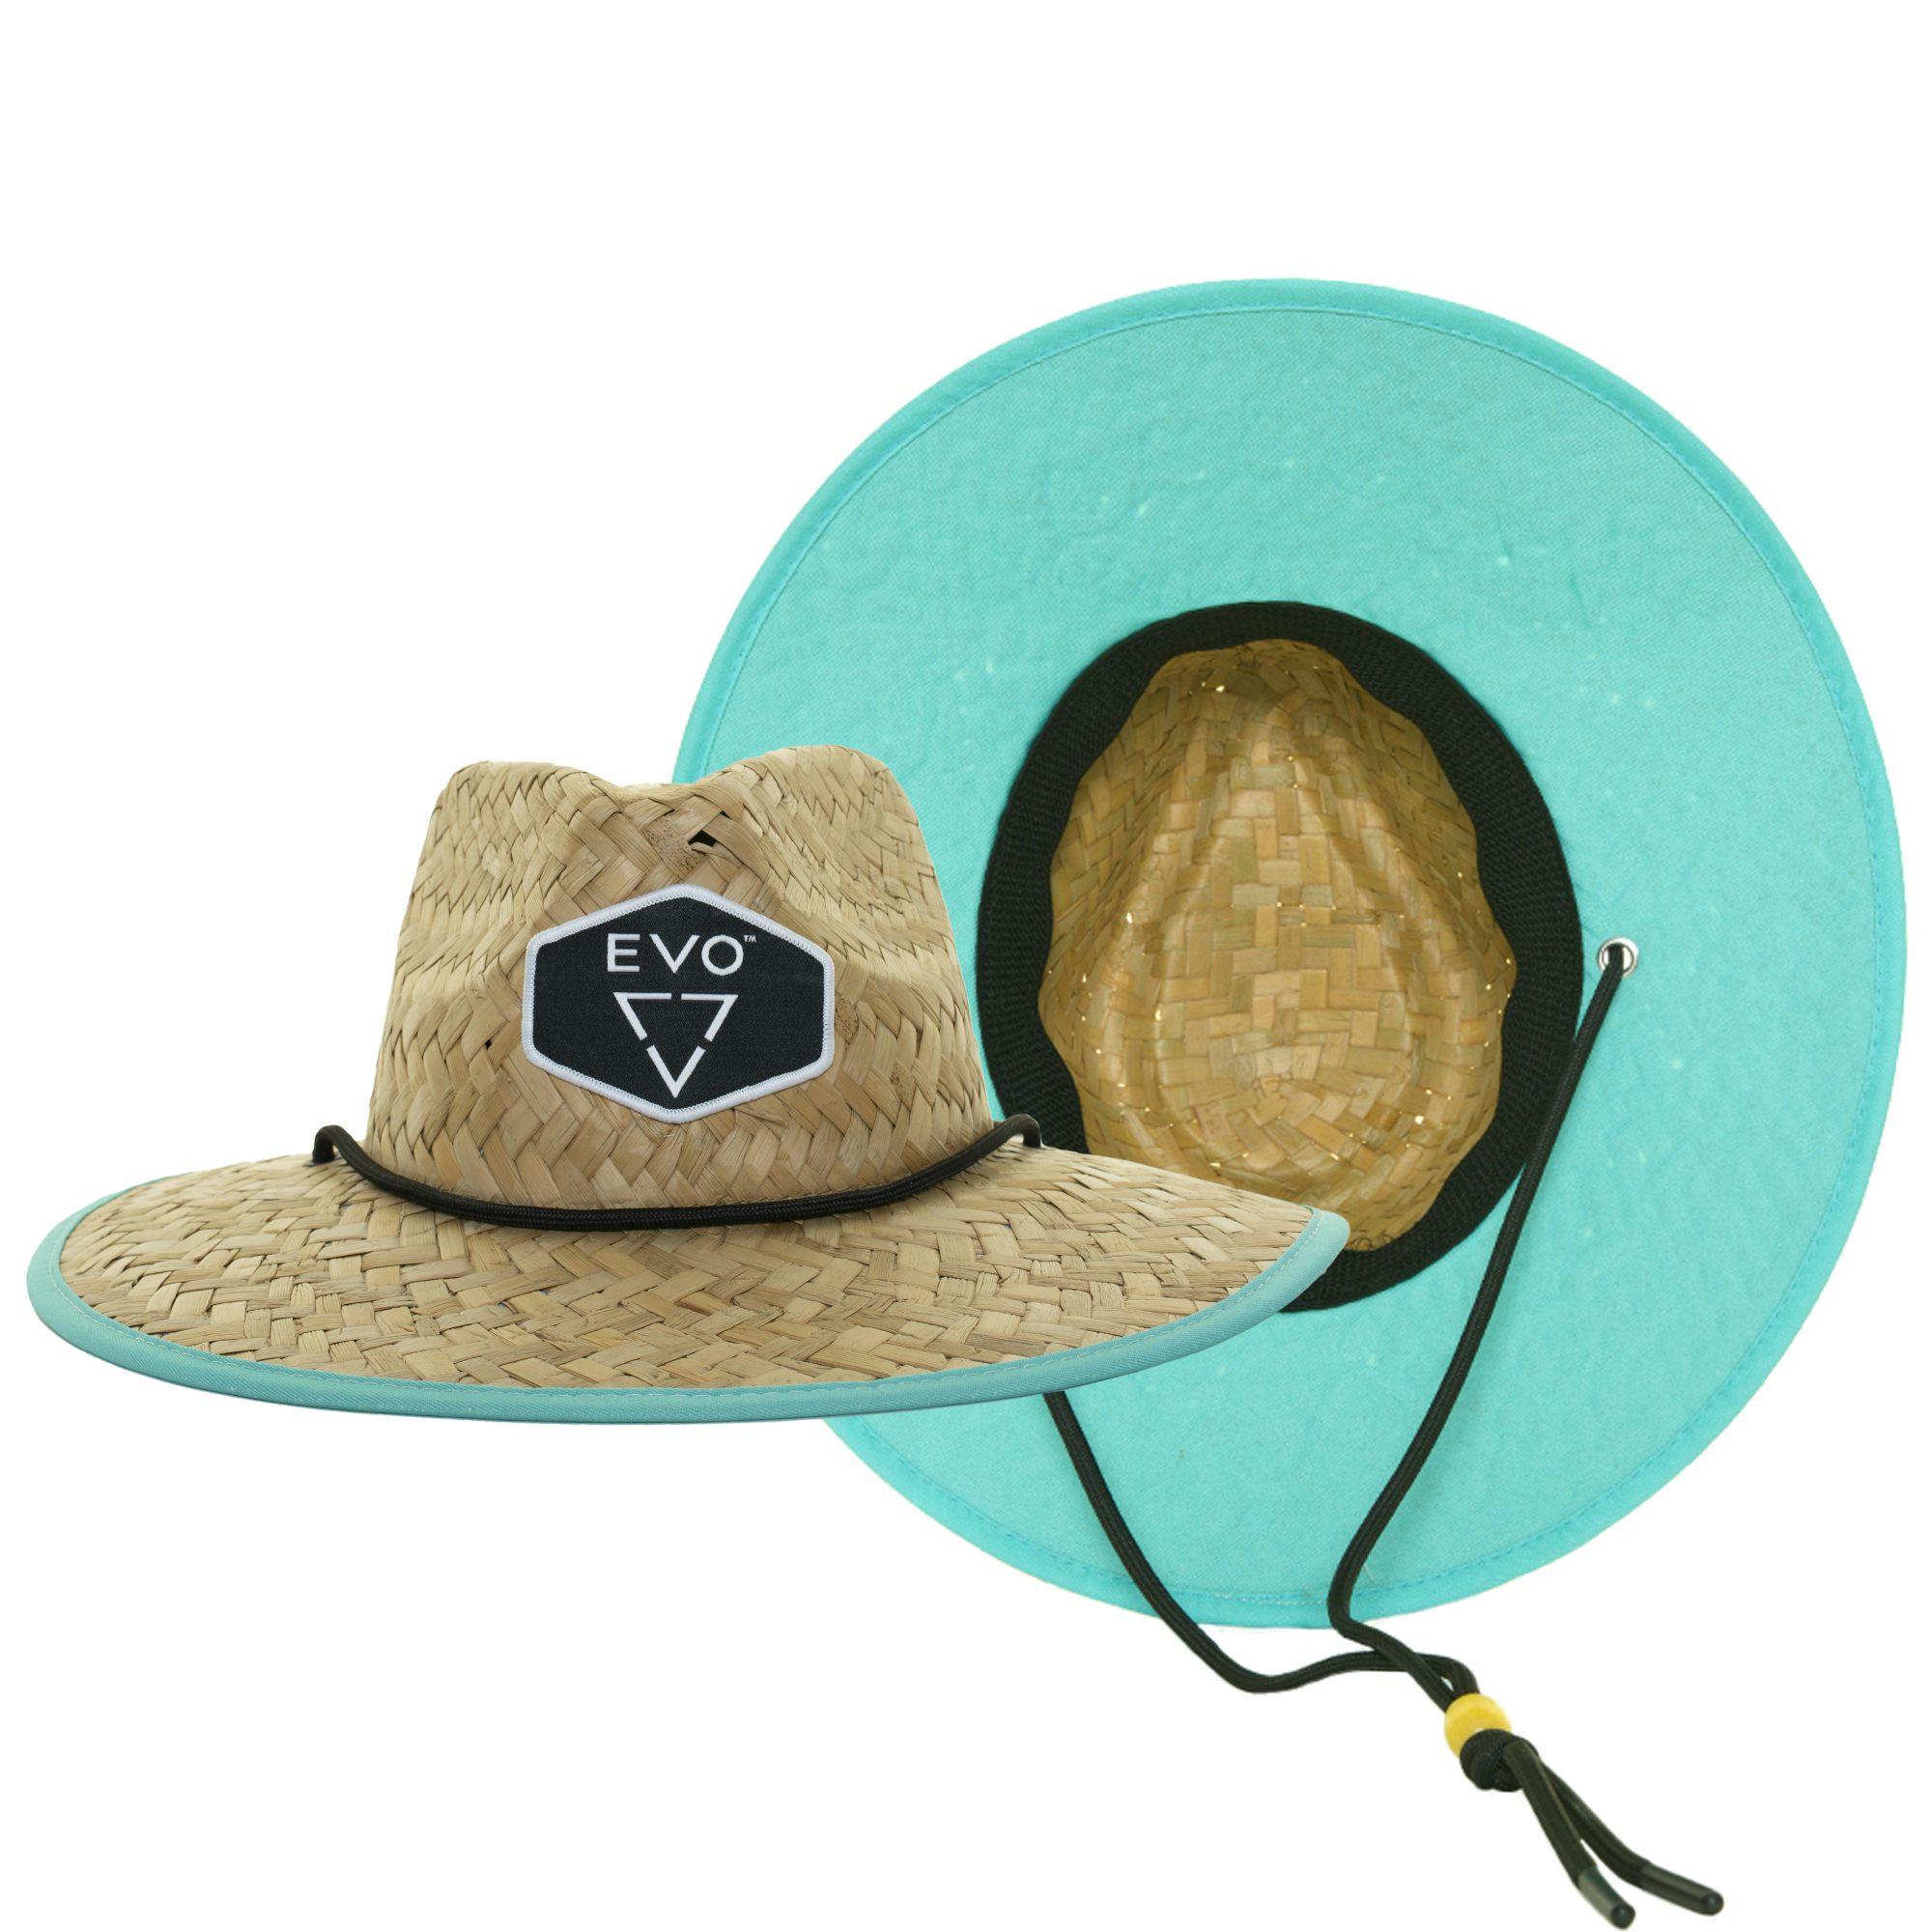 EVO Straw Lifeguard Hat - Jetty Mint (Women's)